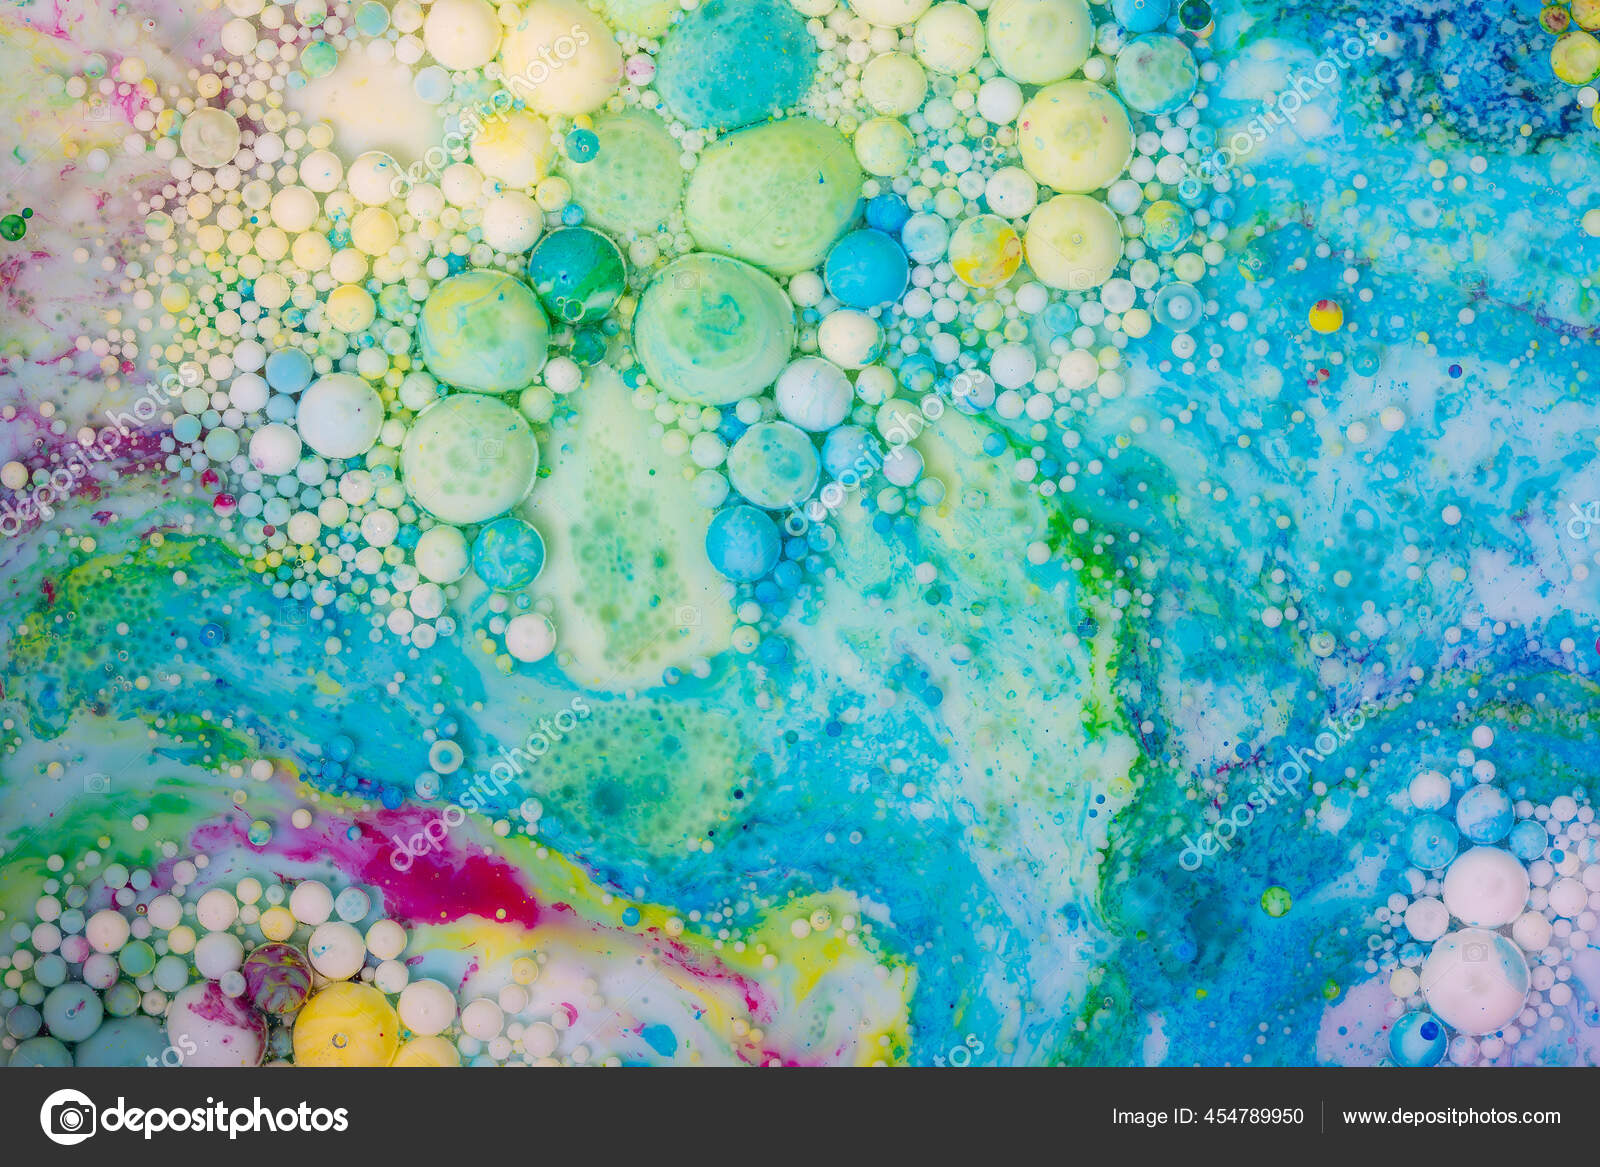 Abstract Bubbles on Liquid Acrylic Paint